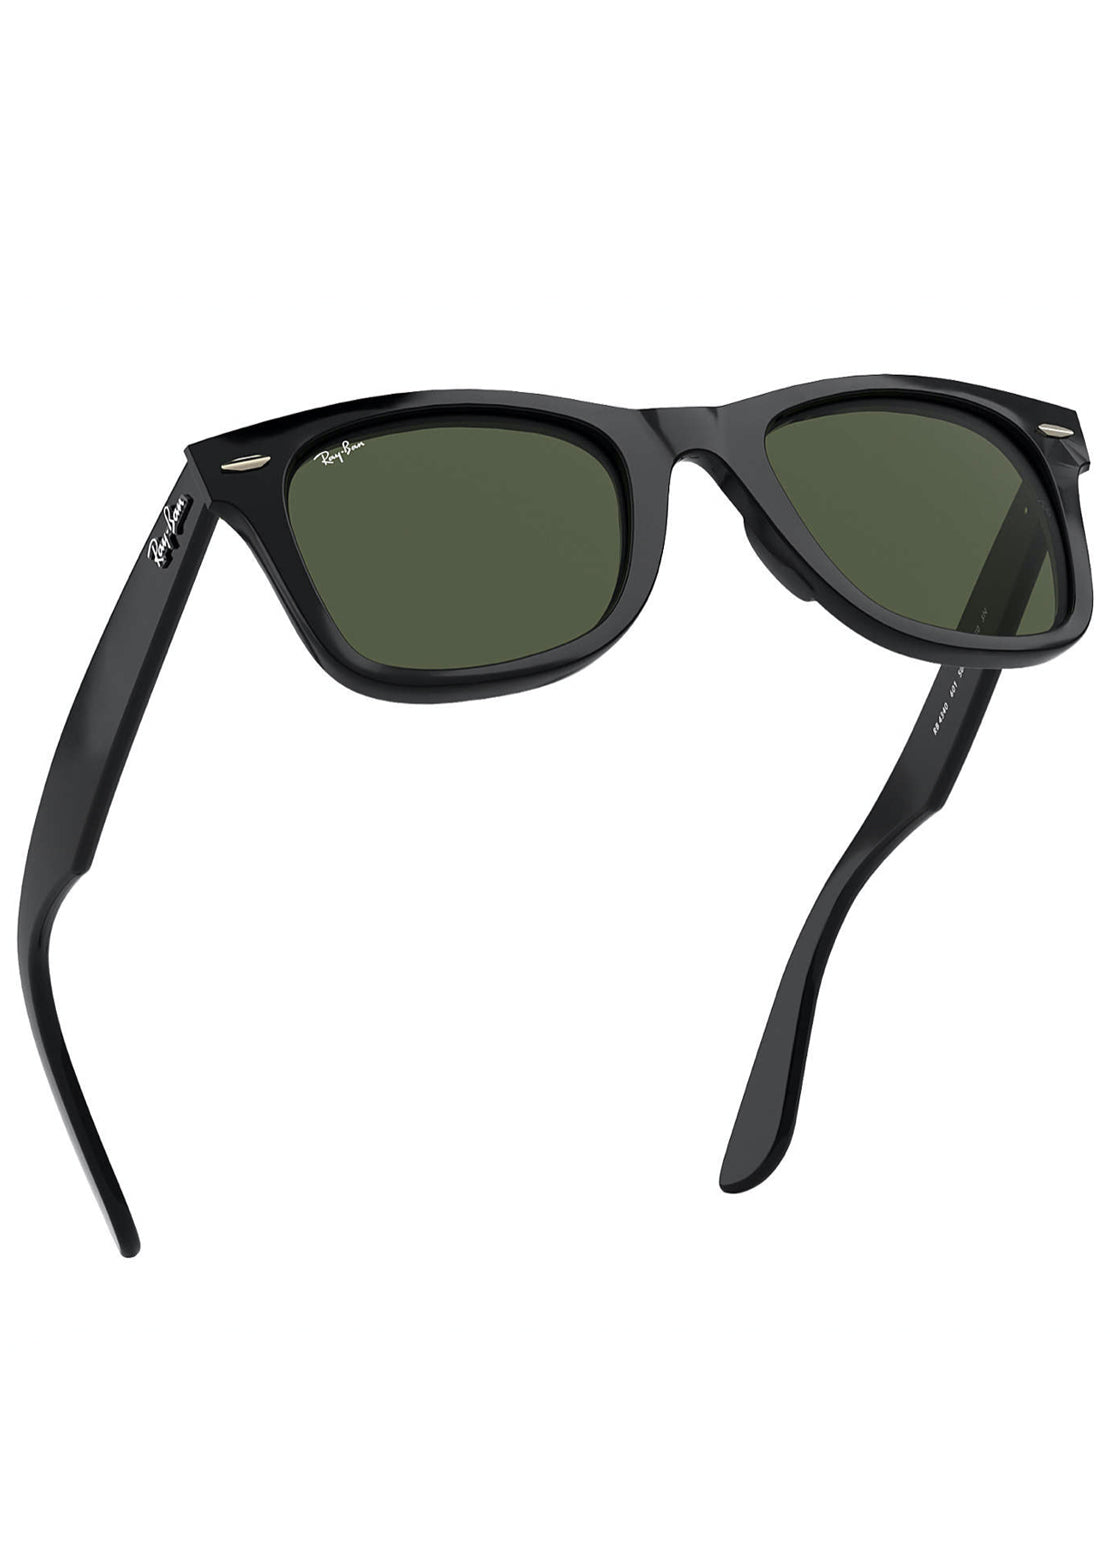 Ray-Ban Wayfarer Ease RB4340 Sunglasses Injected Black/Green Classic G-15